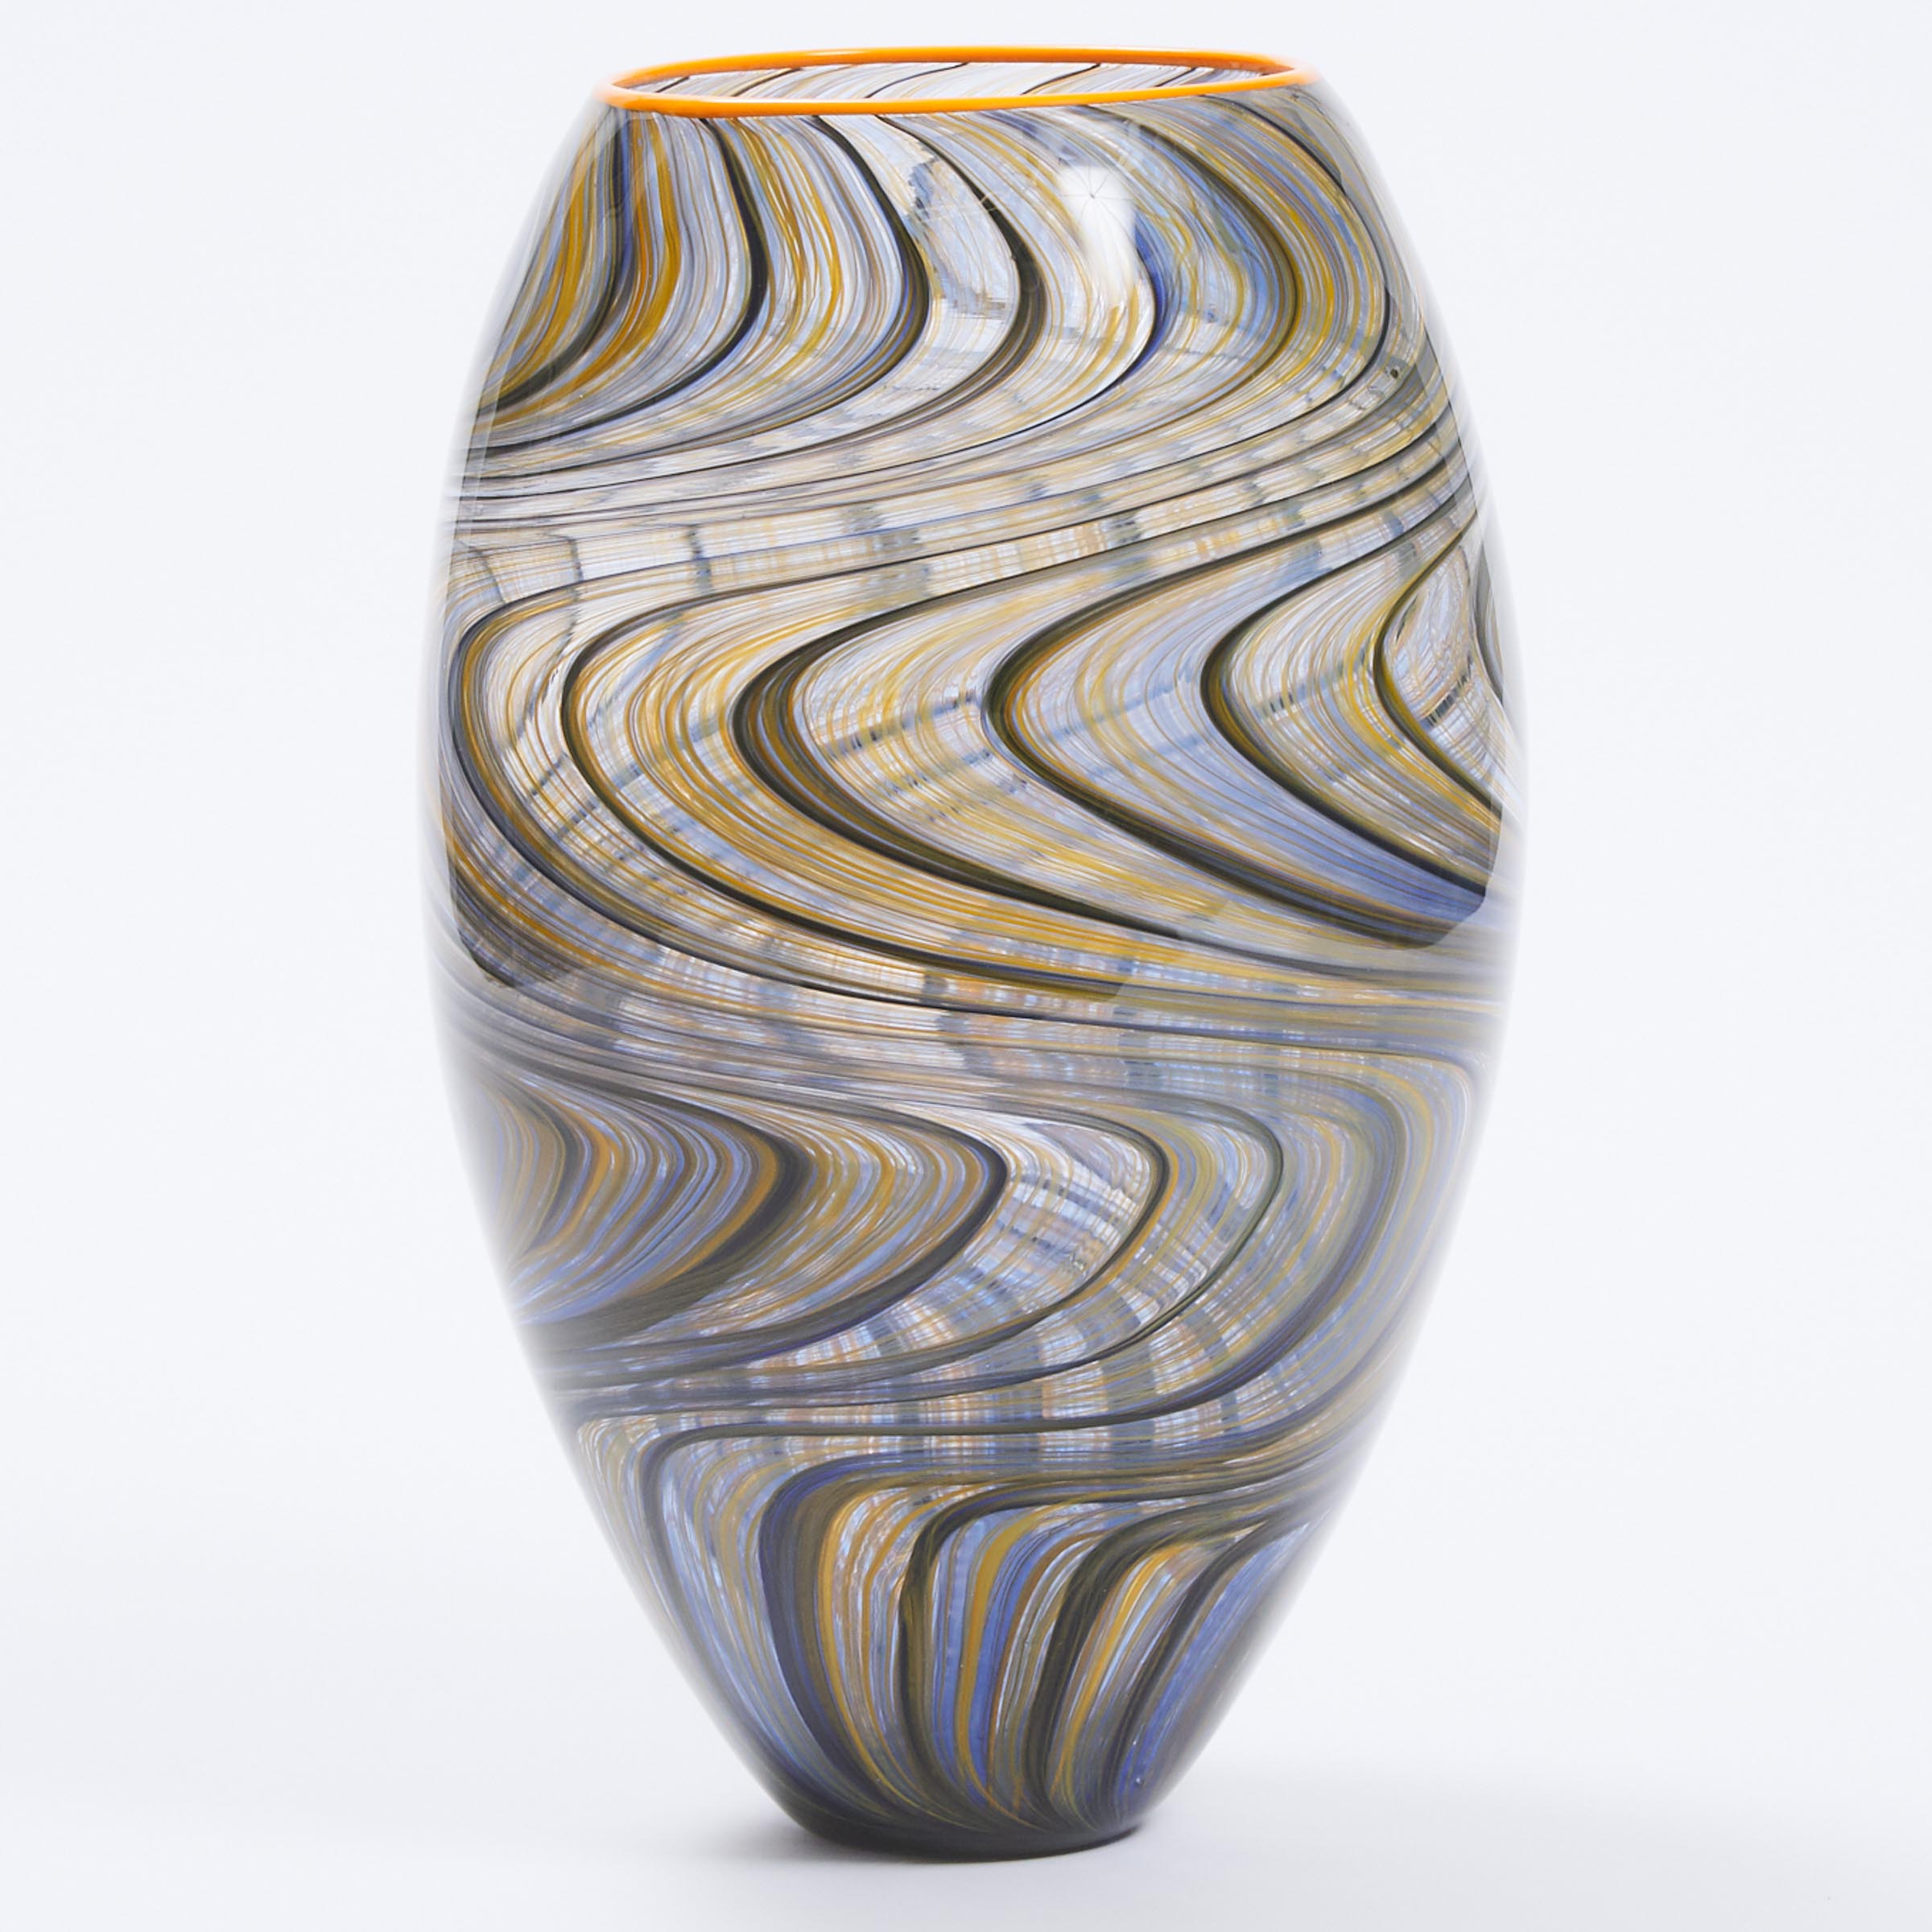 Welmo Internally Decorated Studio Glass Vase, early 21st century